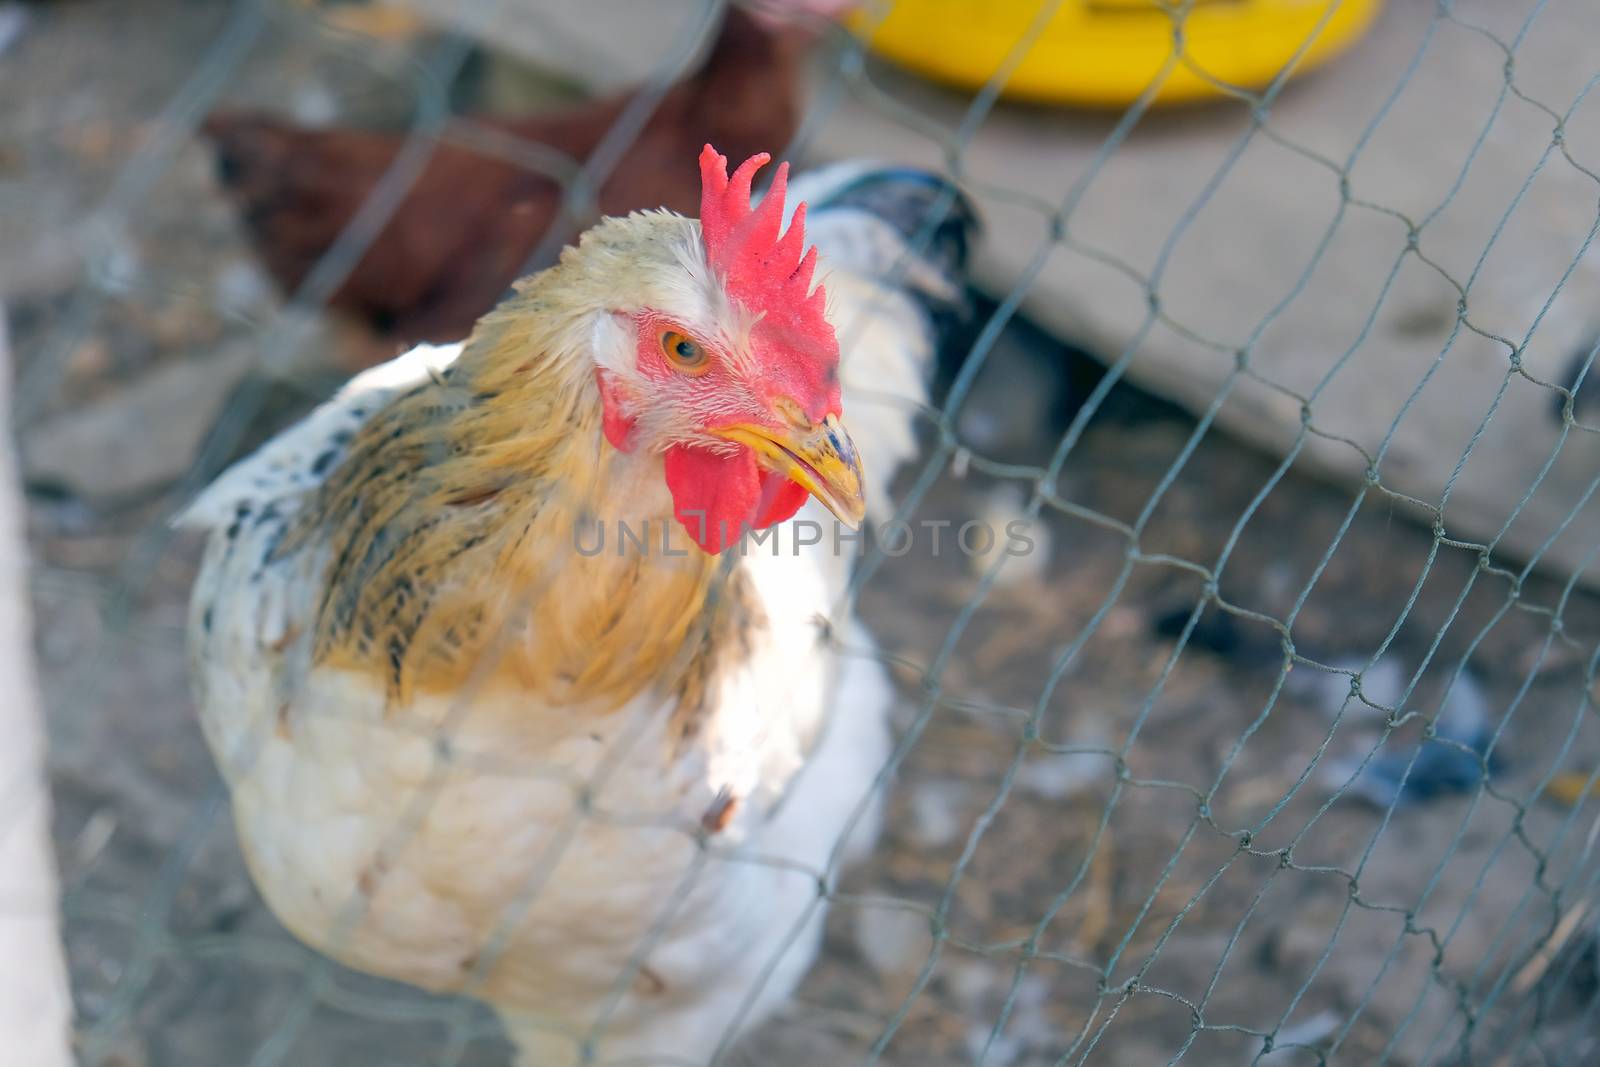 farm animals, Chickens on traditional free range poultry farm in Saraburi province, Thailand